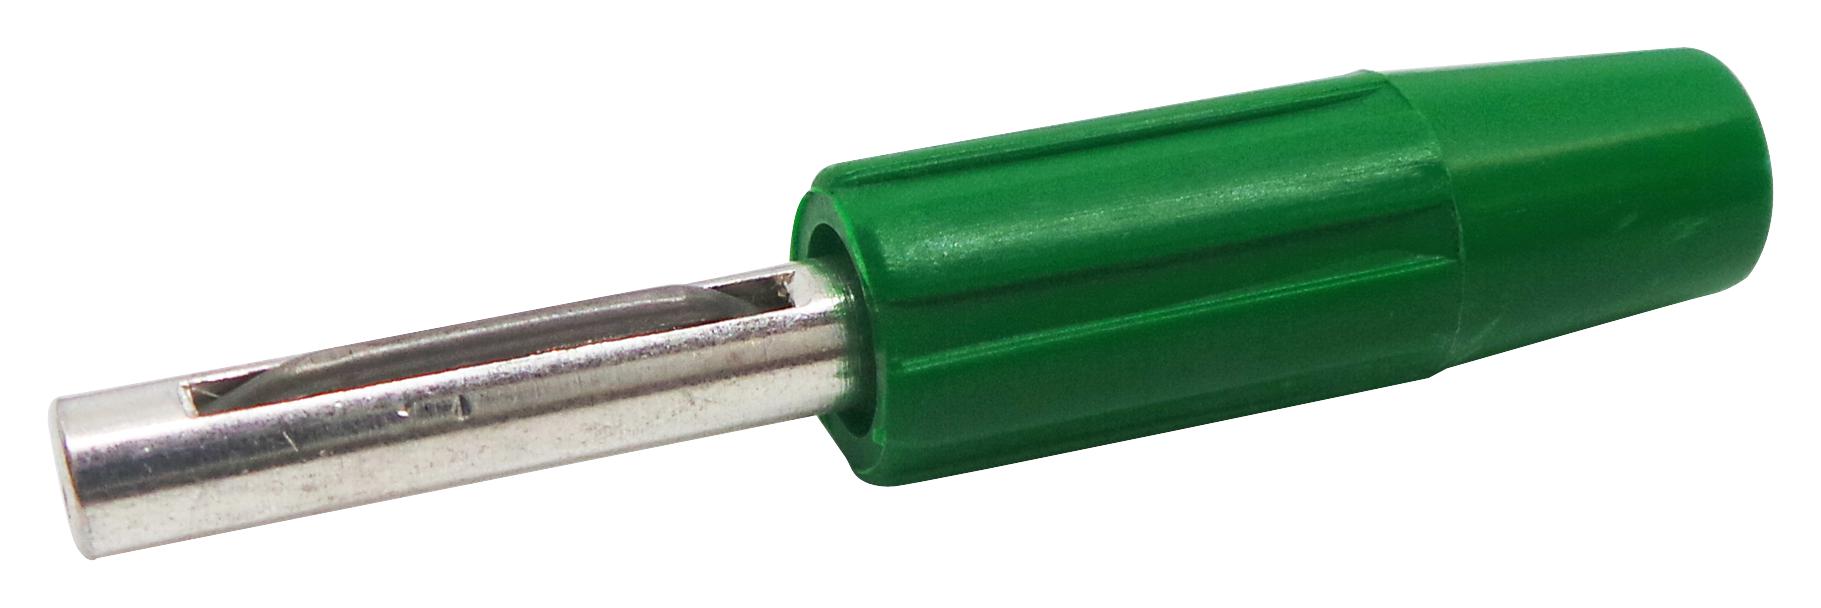 Deltron Components 550-0400-01 Banana Plug, 10A, 4mm, Cable, Green